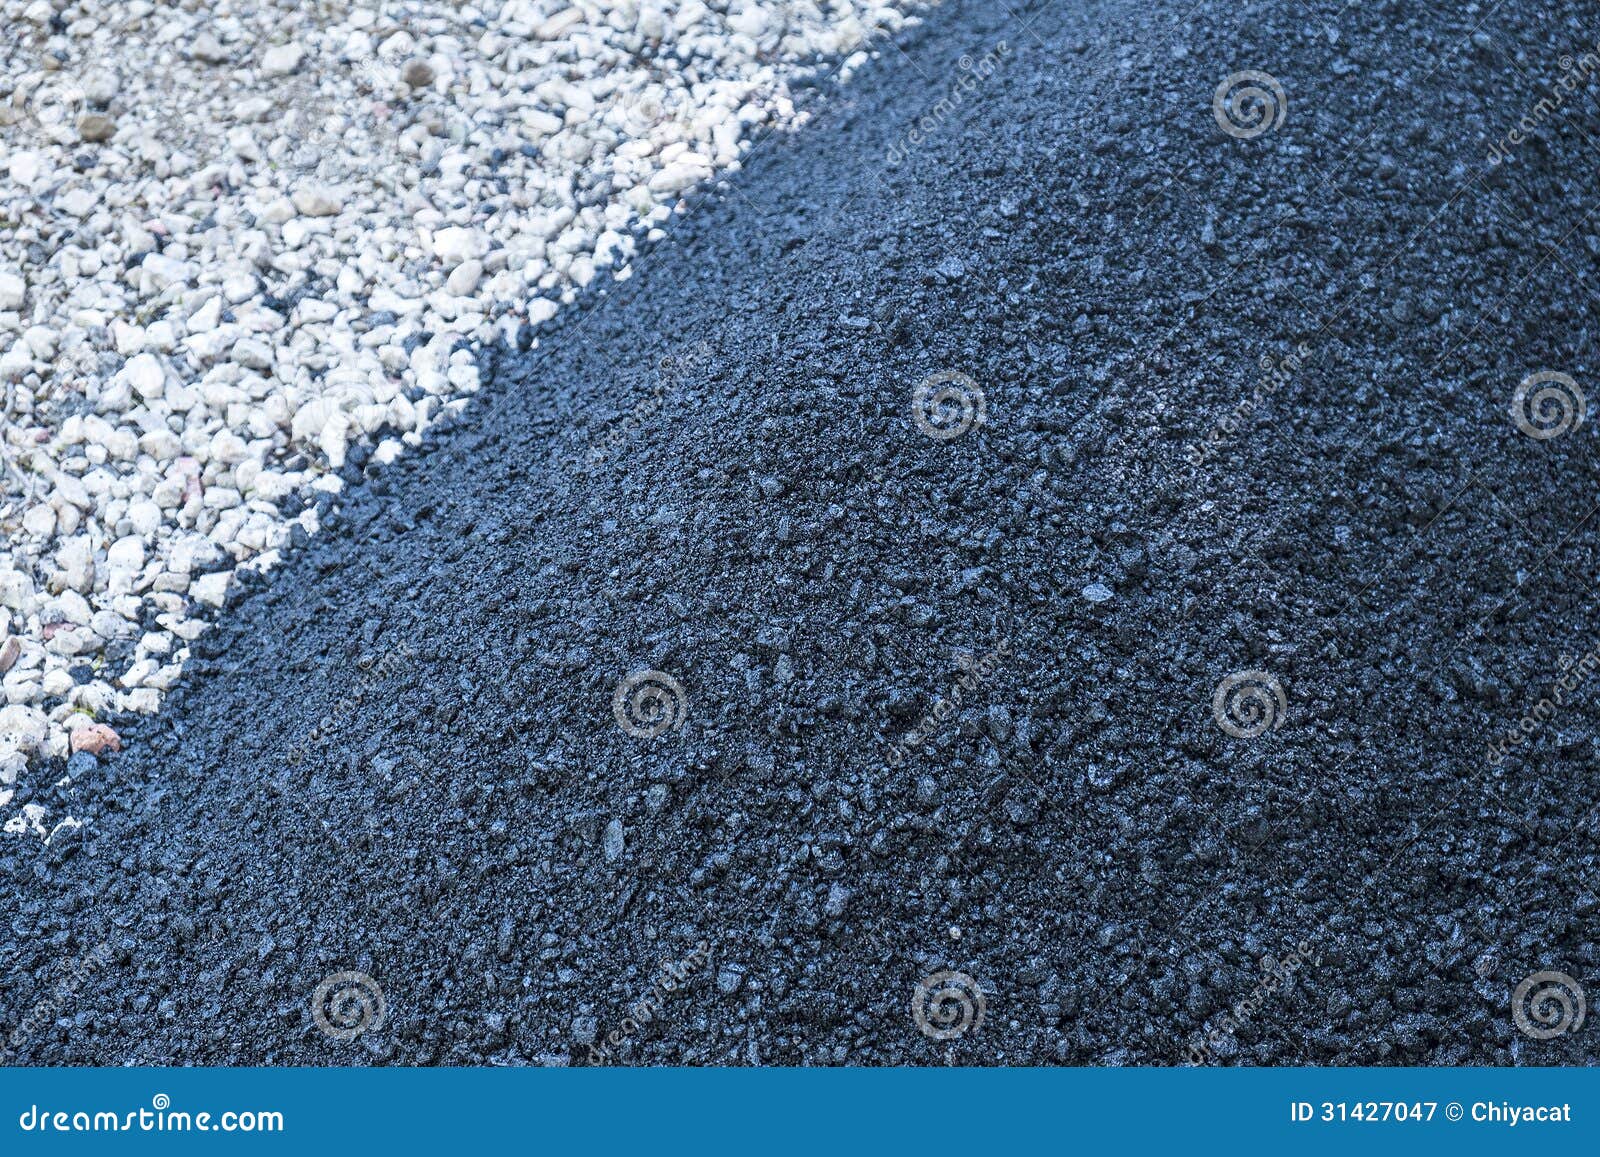 paving a driveway with asphalt